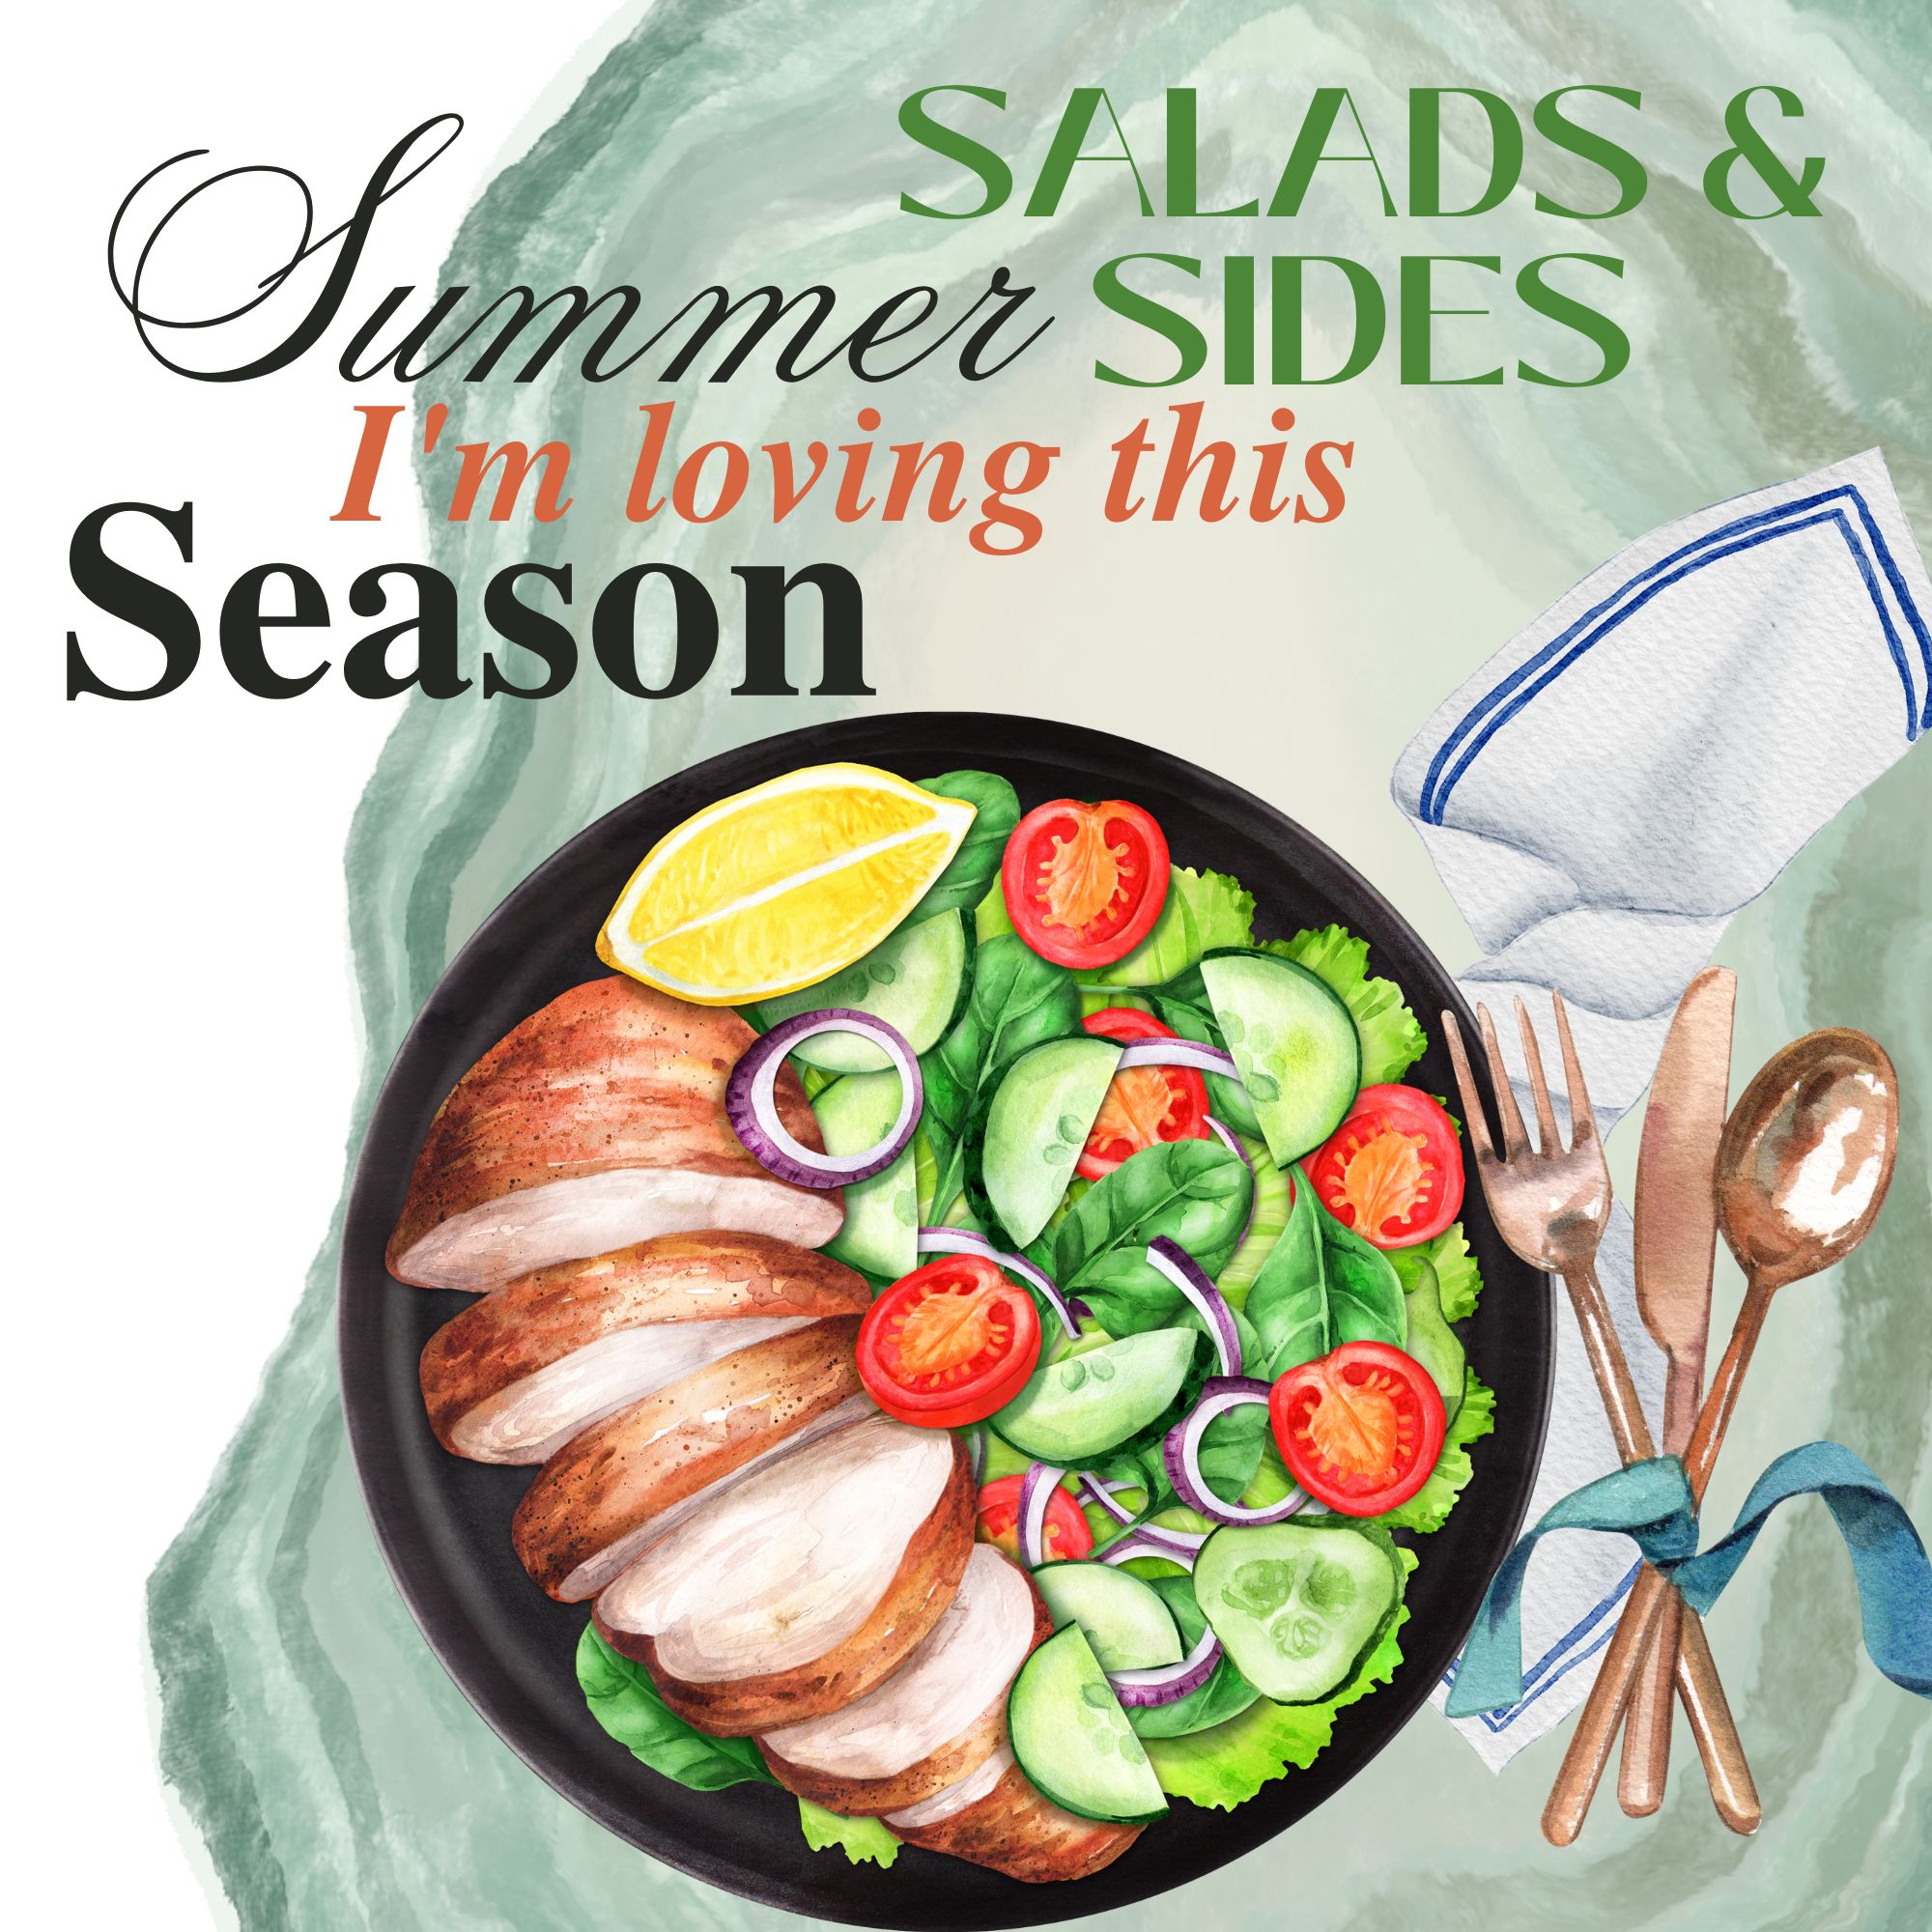 Six Summer Salads & Sides I’m Loving This Season